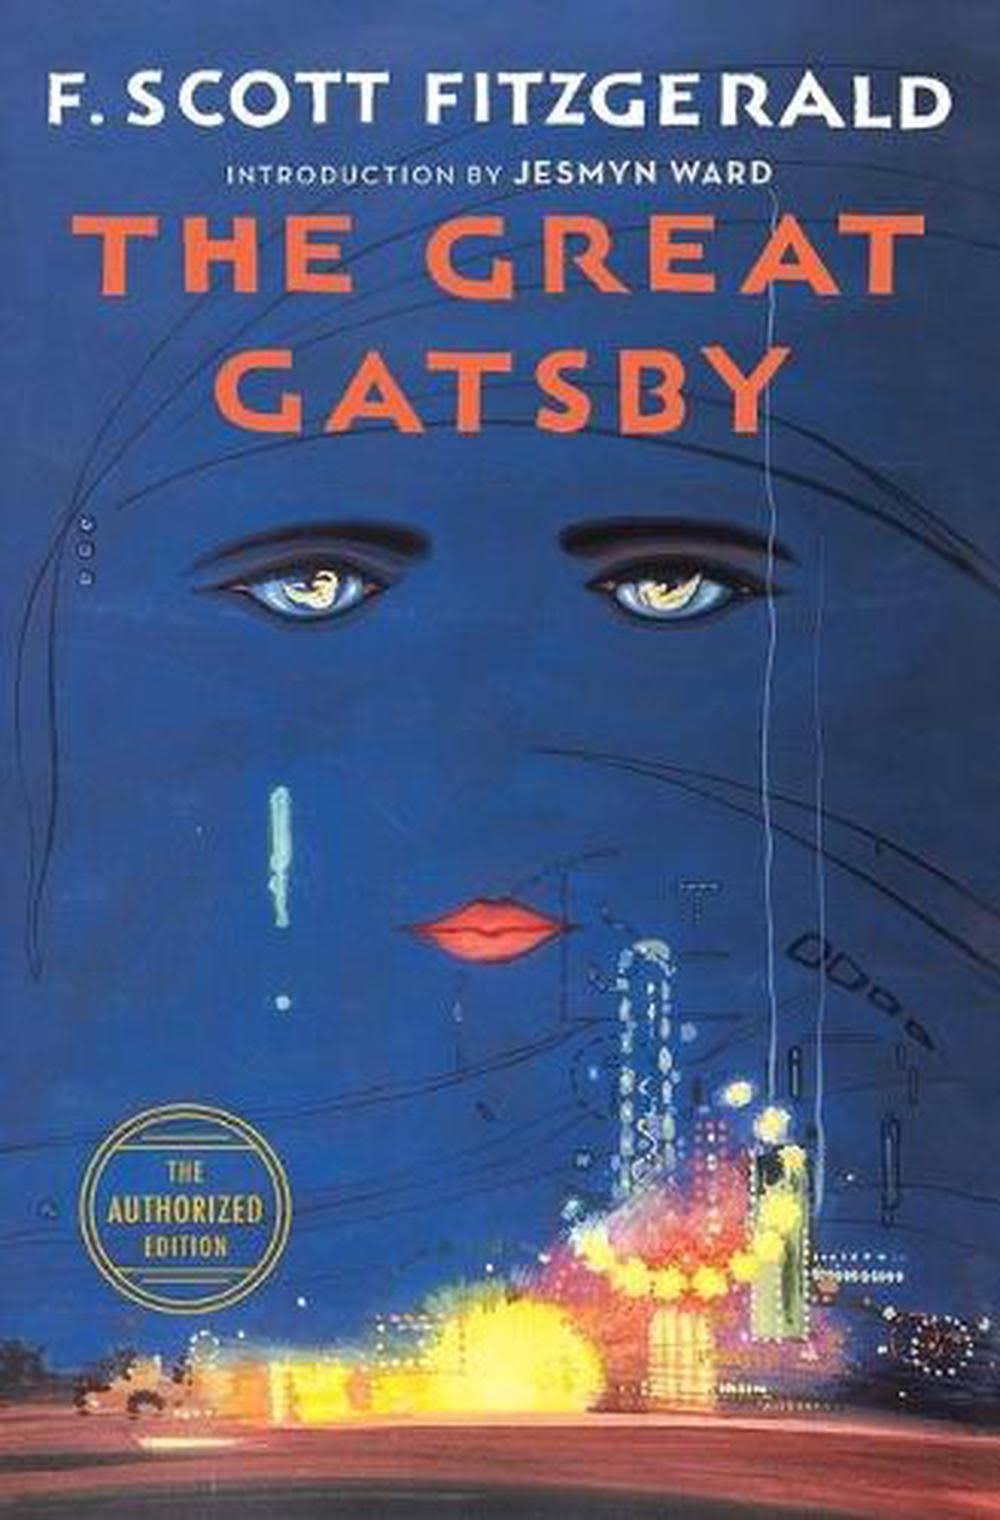 Great Gatsby The by F. Scott Fitzgerald